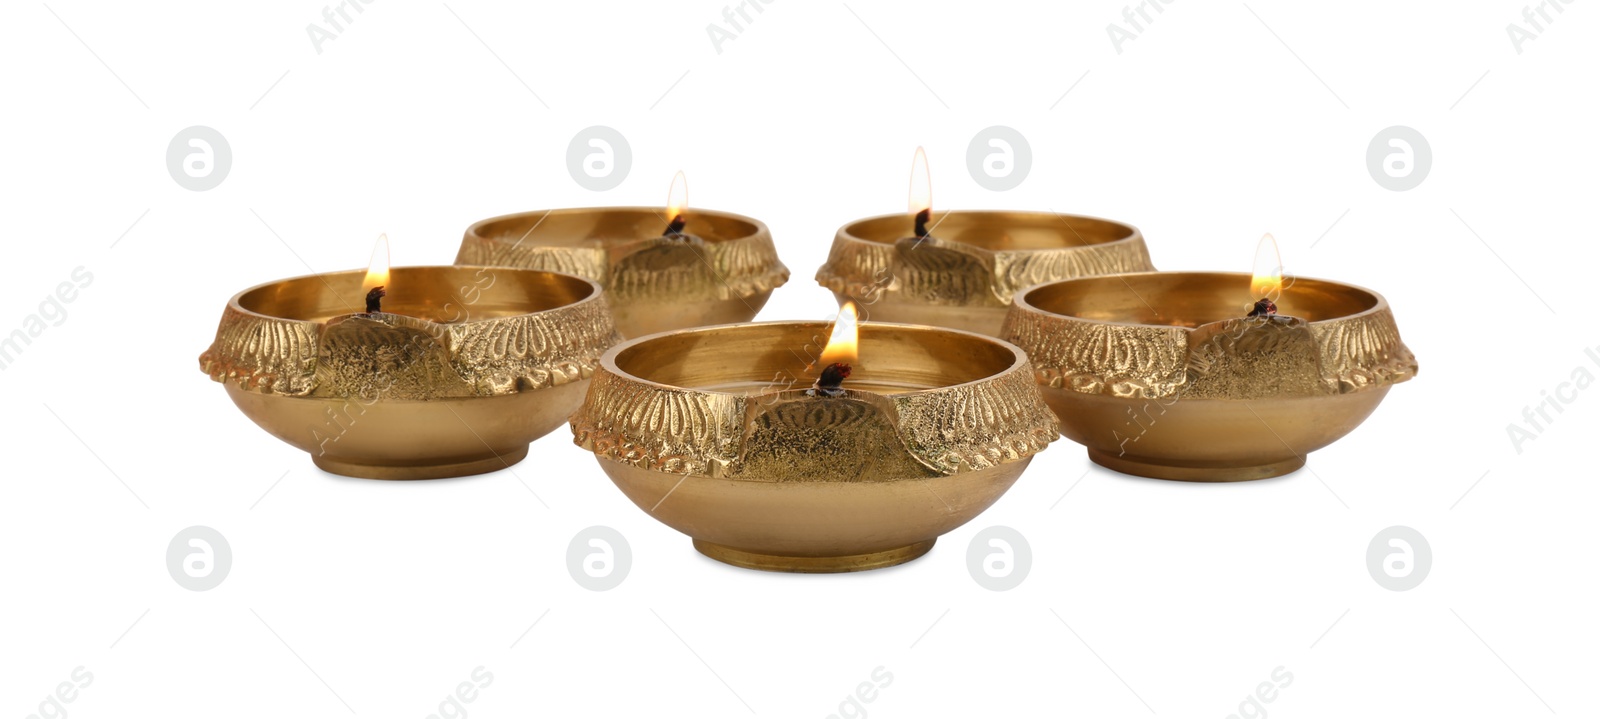 Photo of Lit diya lamps on white background. Diwali celebration